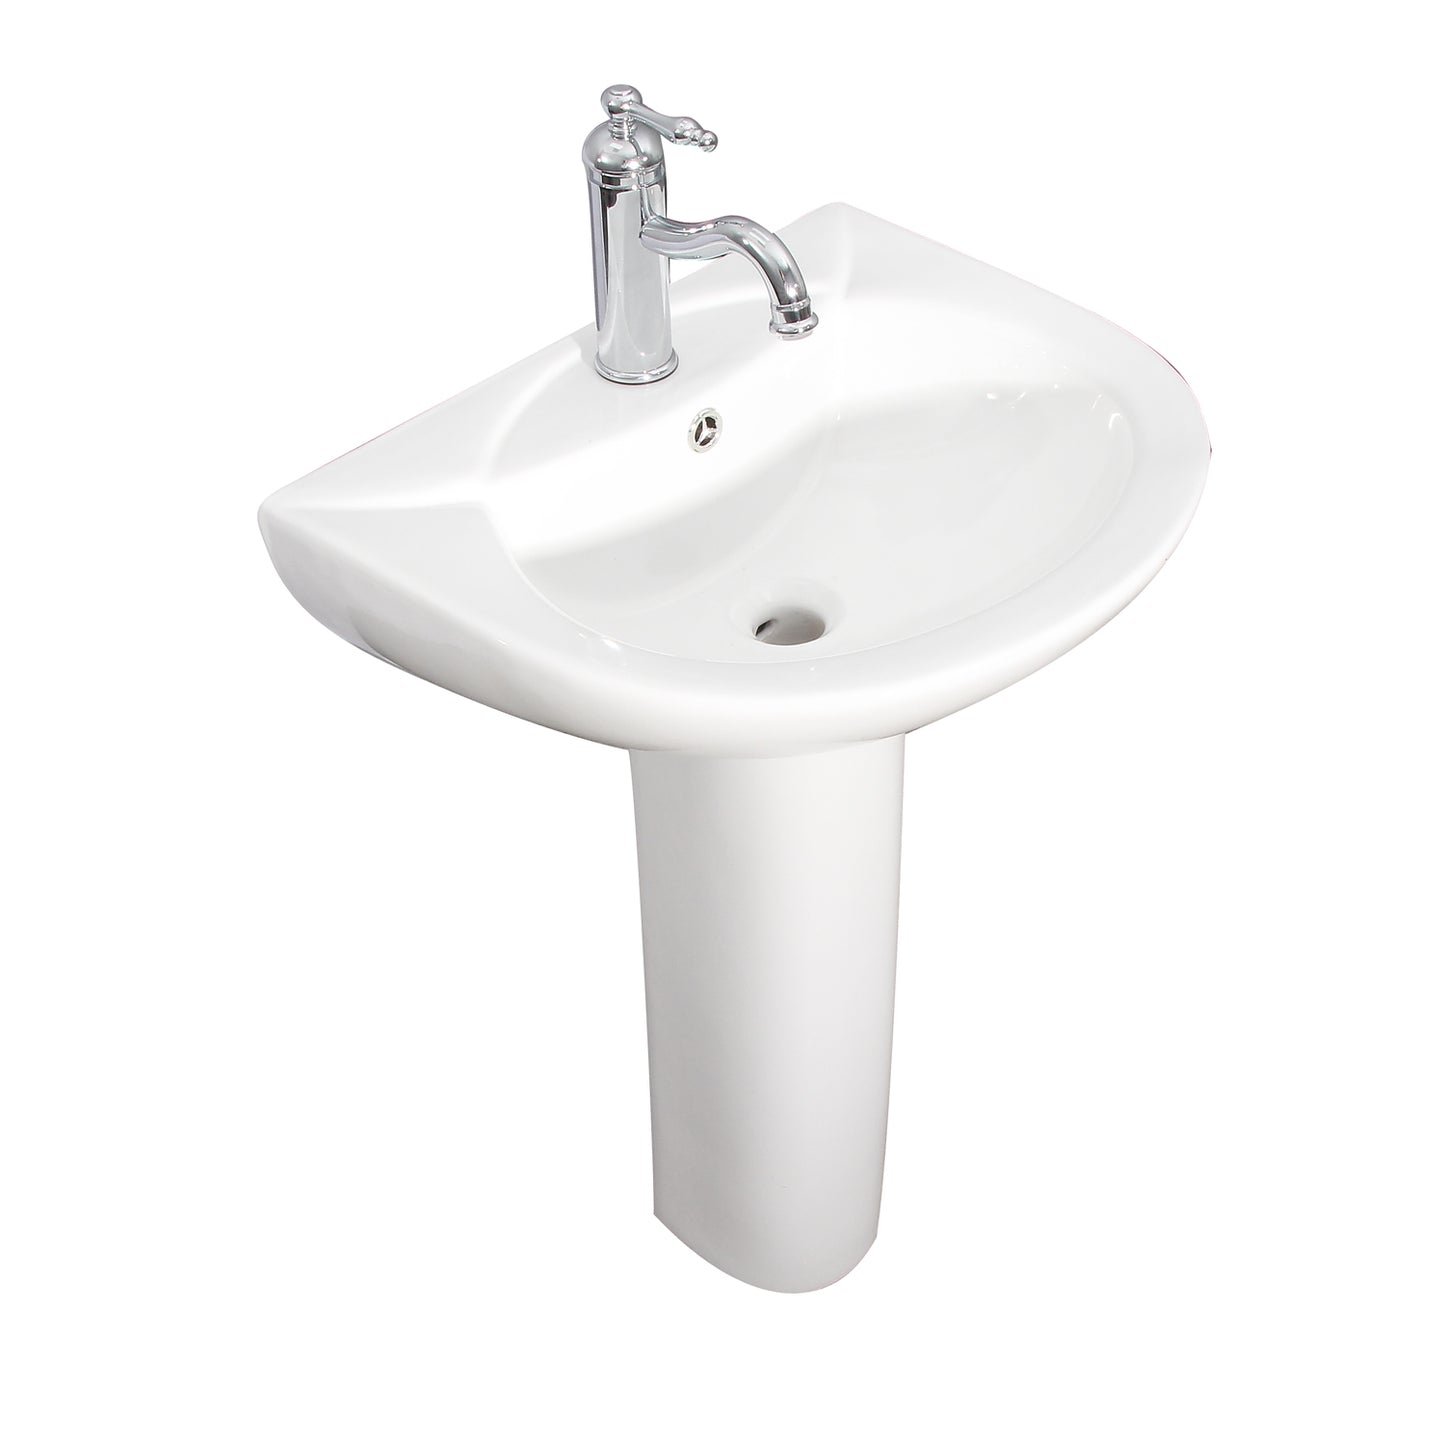 Banks Pedestal Bathroom Sink White for 1-Hole Faucet